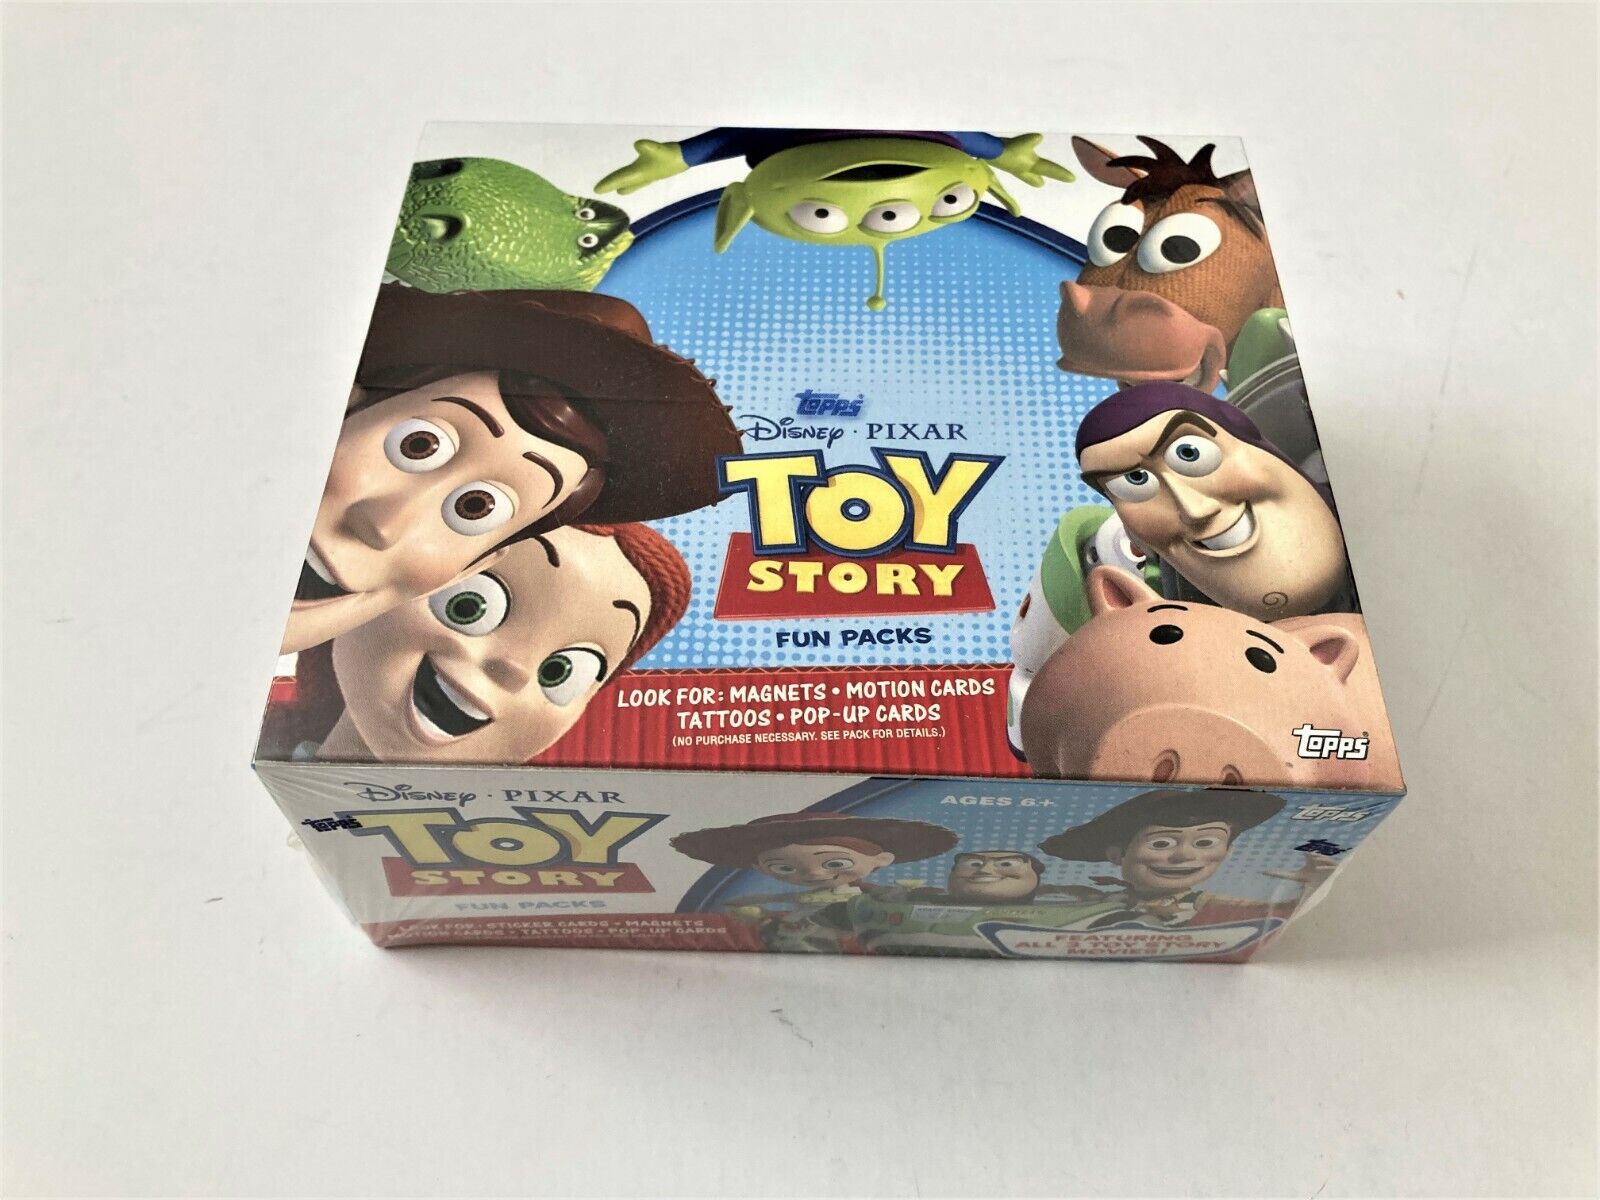 2010 Topps Disney Pixar Toy Story Fun Packs Trading Card Box NISB